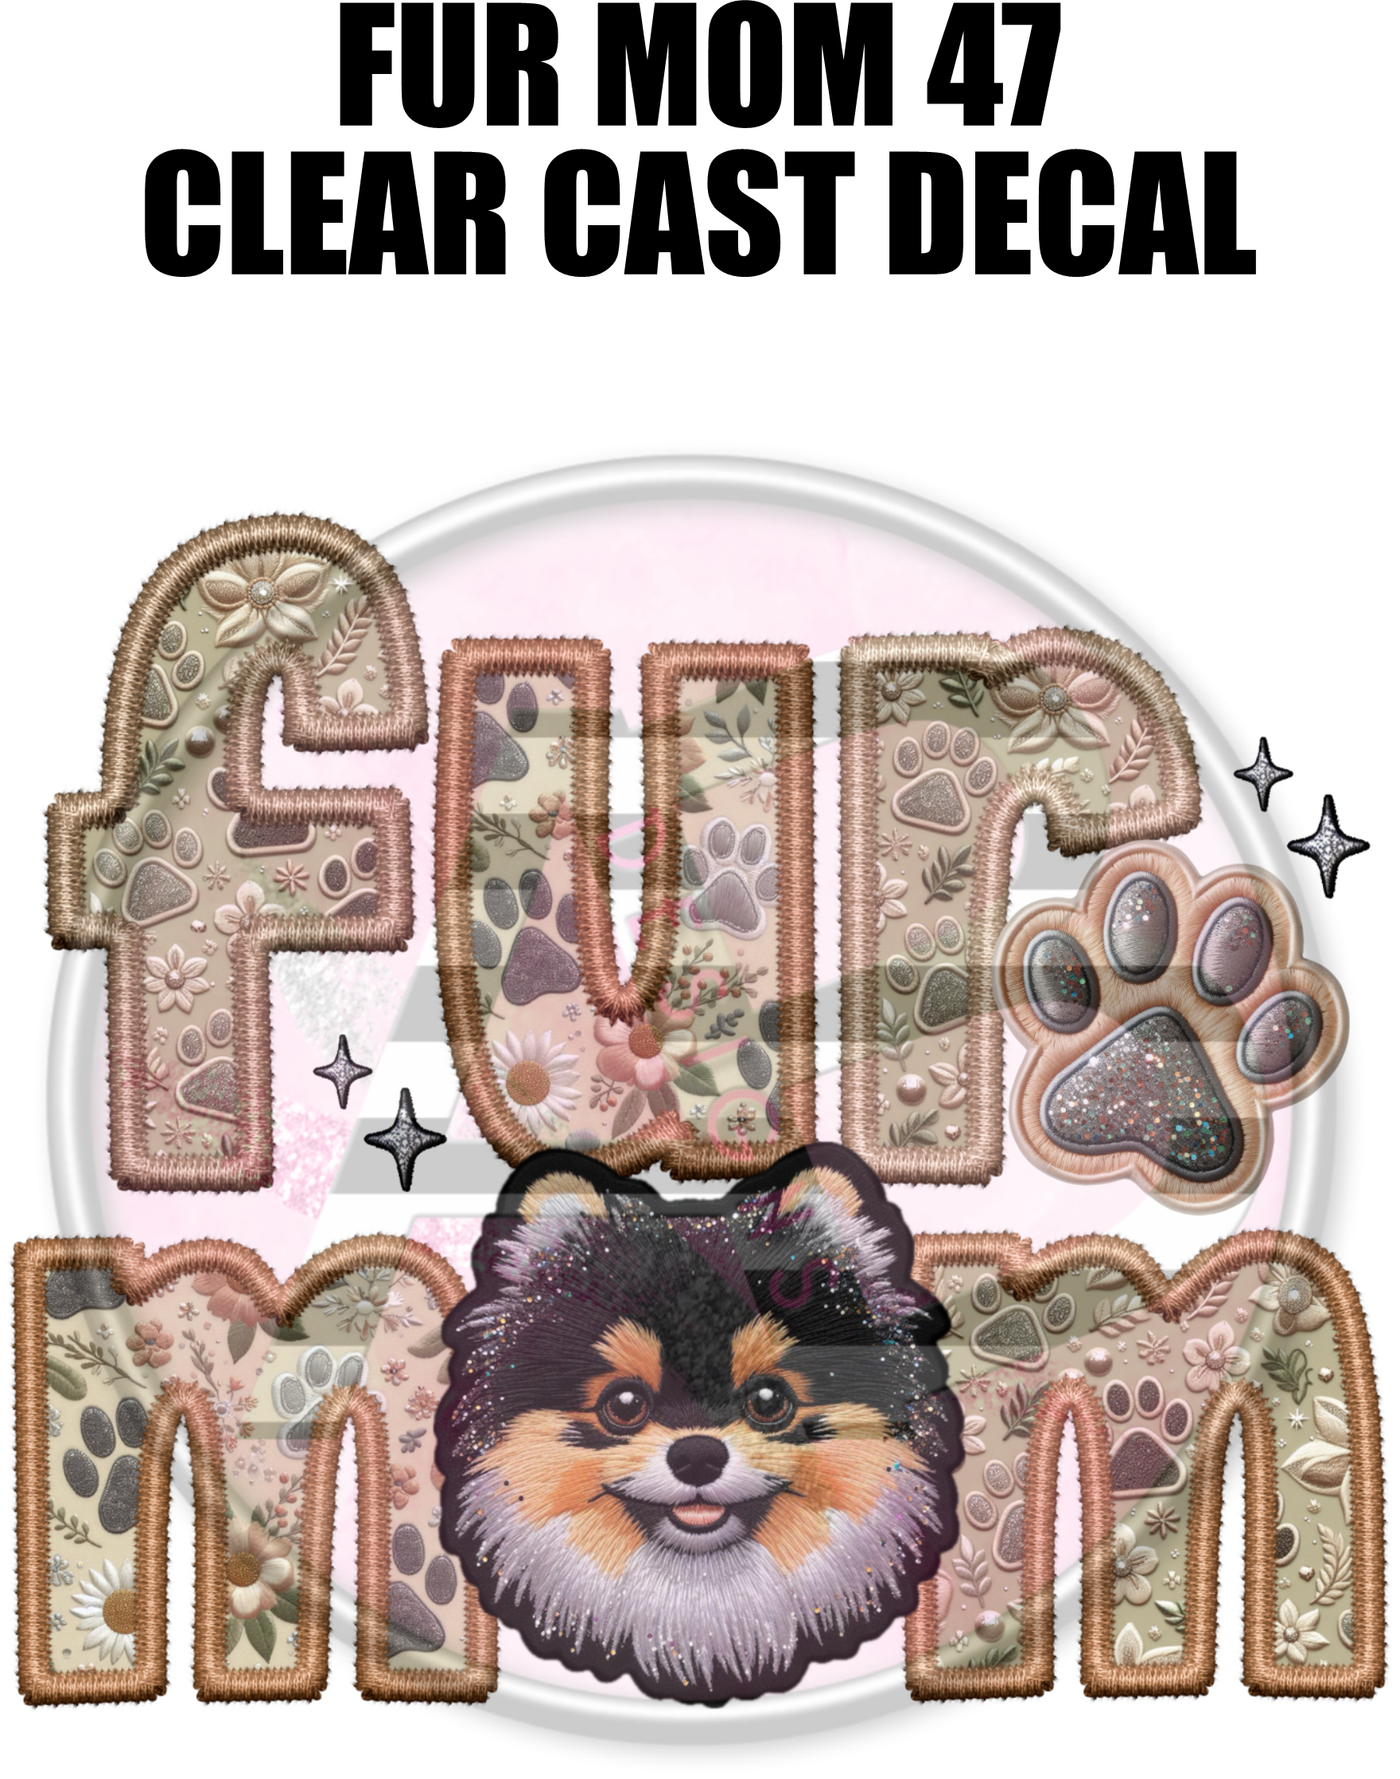 Fur Mom 47 - Clear Cast Decal